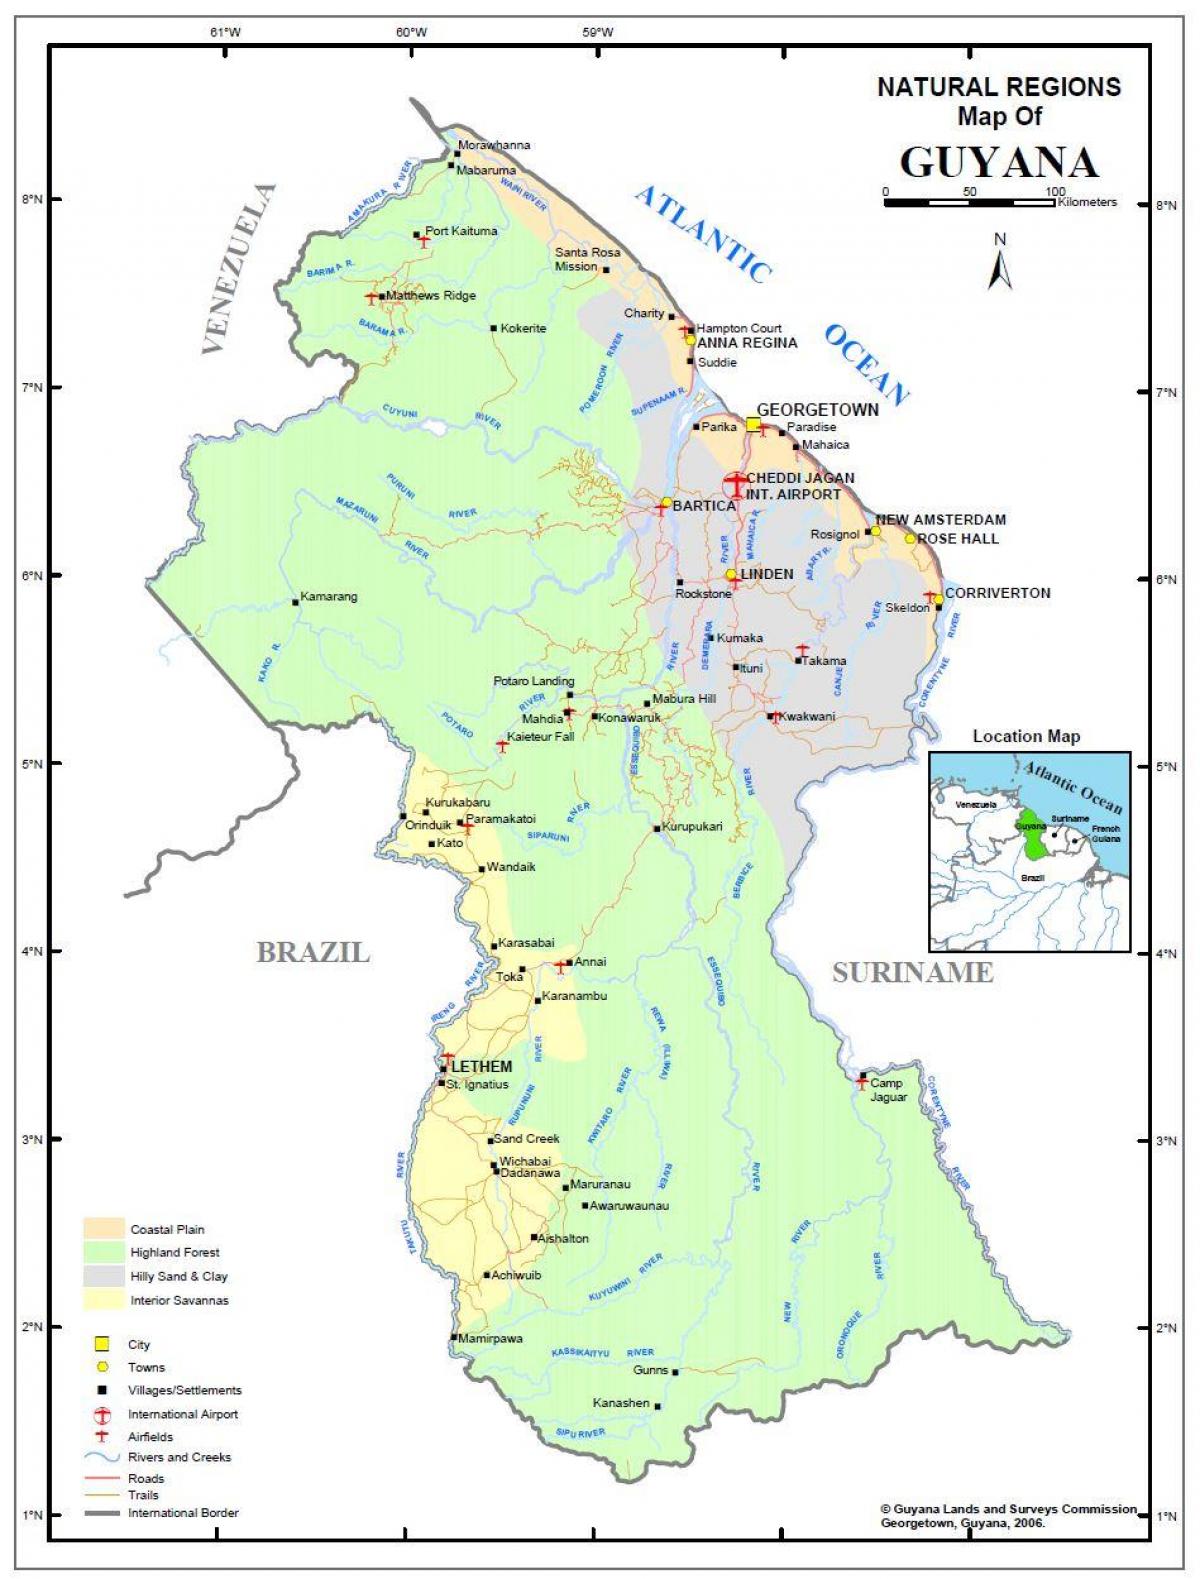 kort Guyana, som viser de 4 naturlige regioner